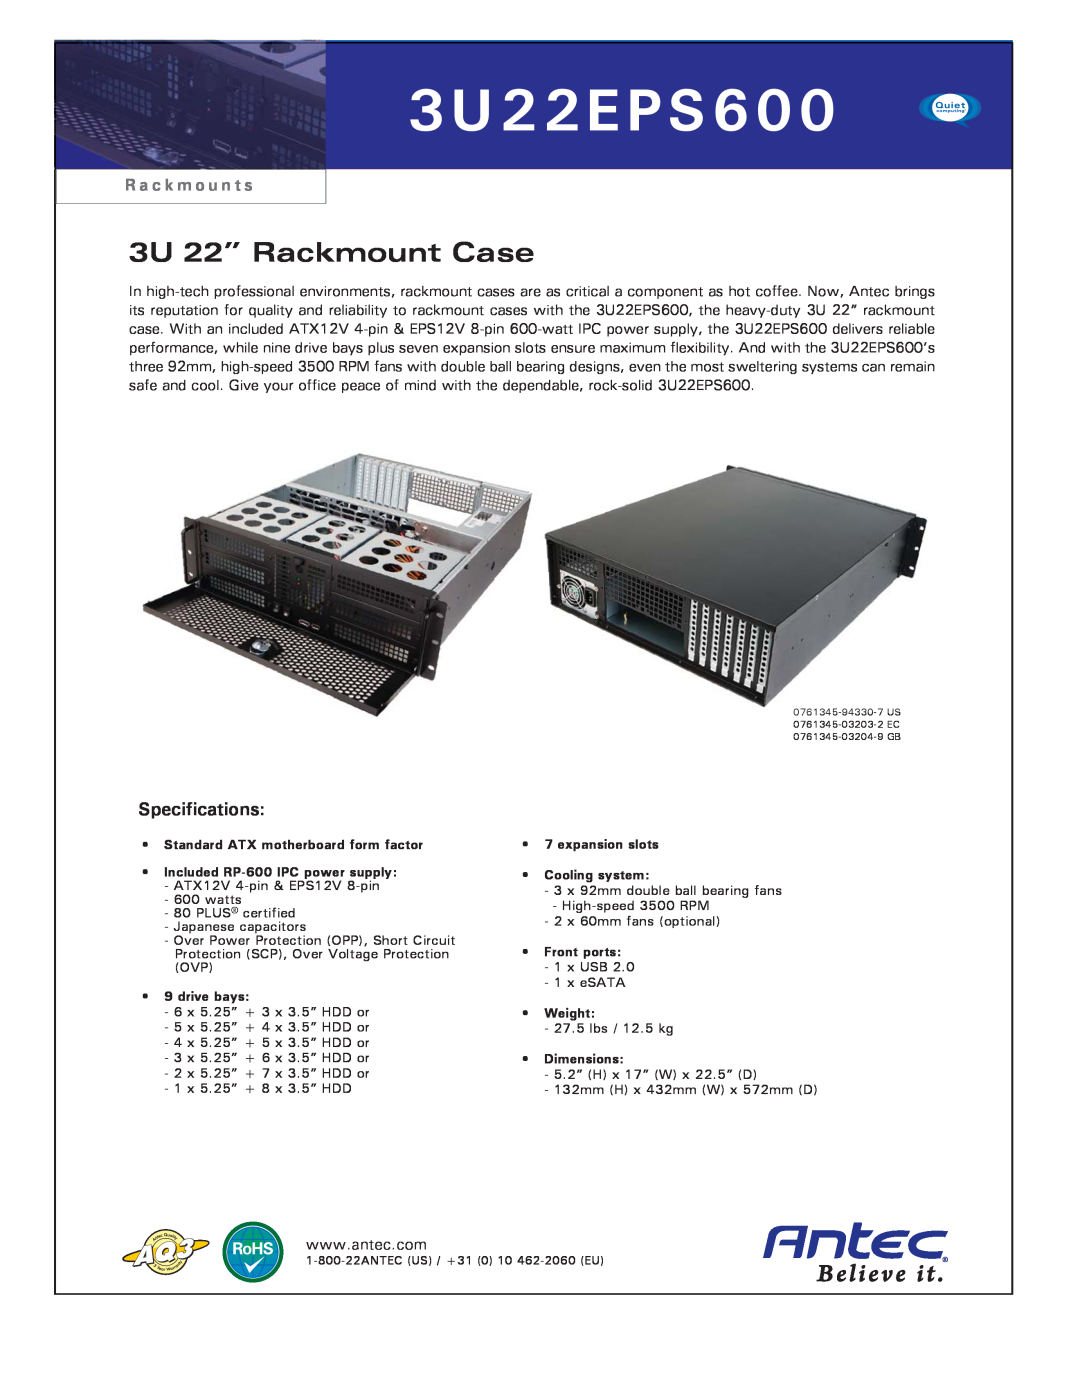 Antec 0761345-03203-2 specifications 3U22EPS600, 3U 22” Rackmount Case, Specifications, R a c k m o u n t s, drive bays 